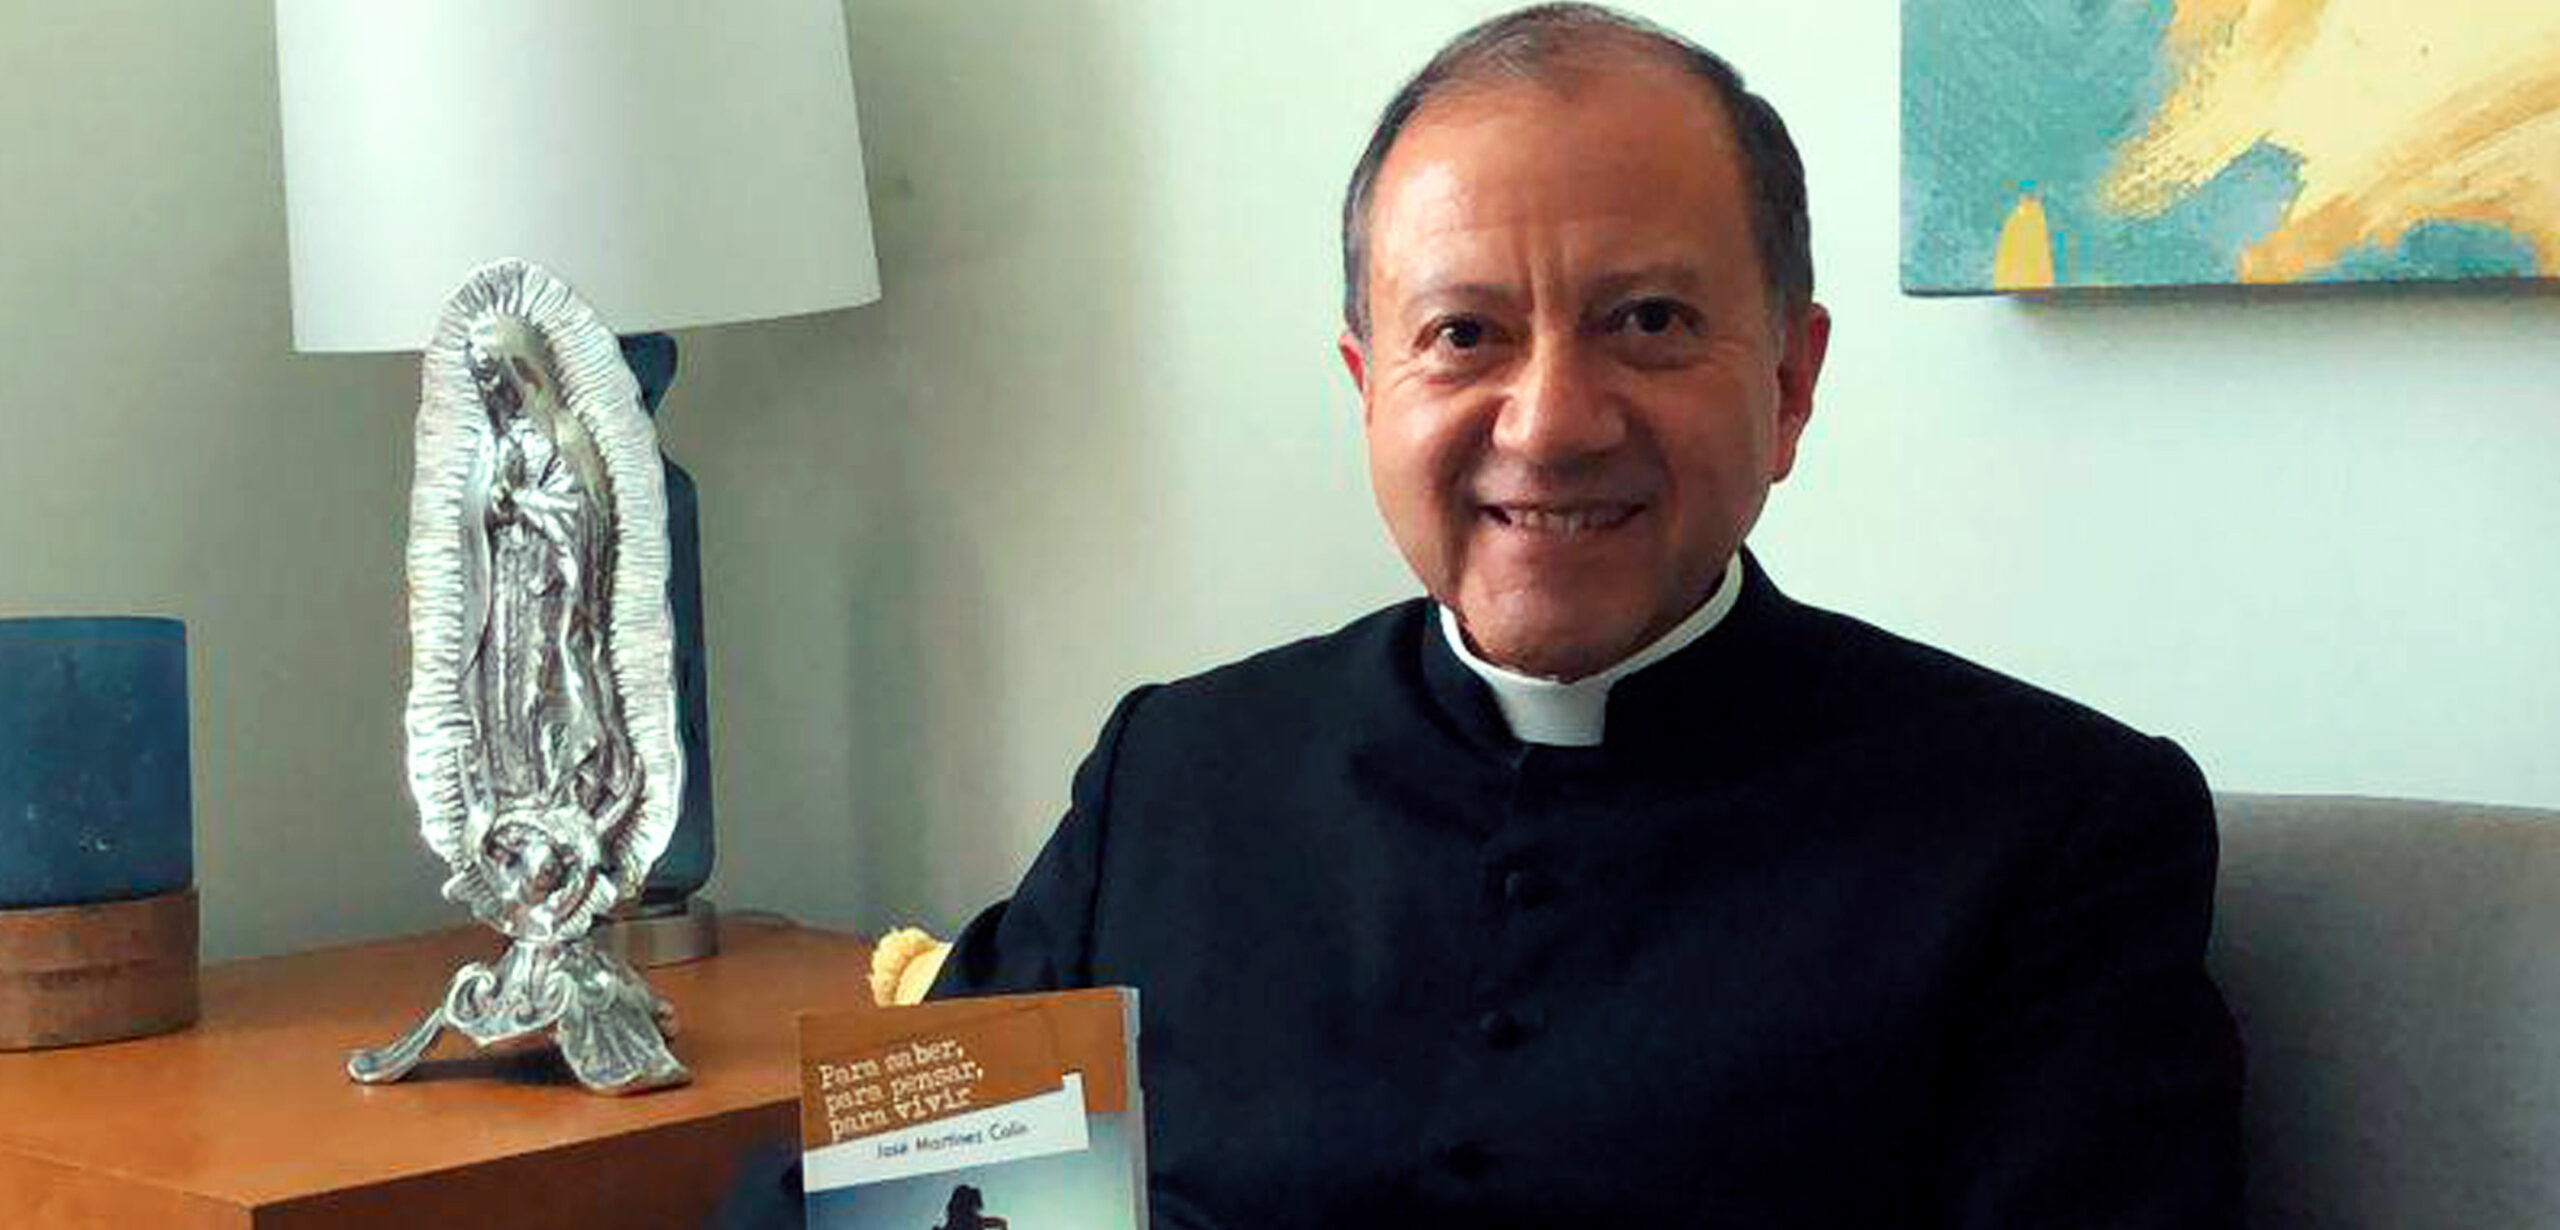 Padre José Martínez